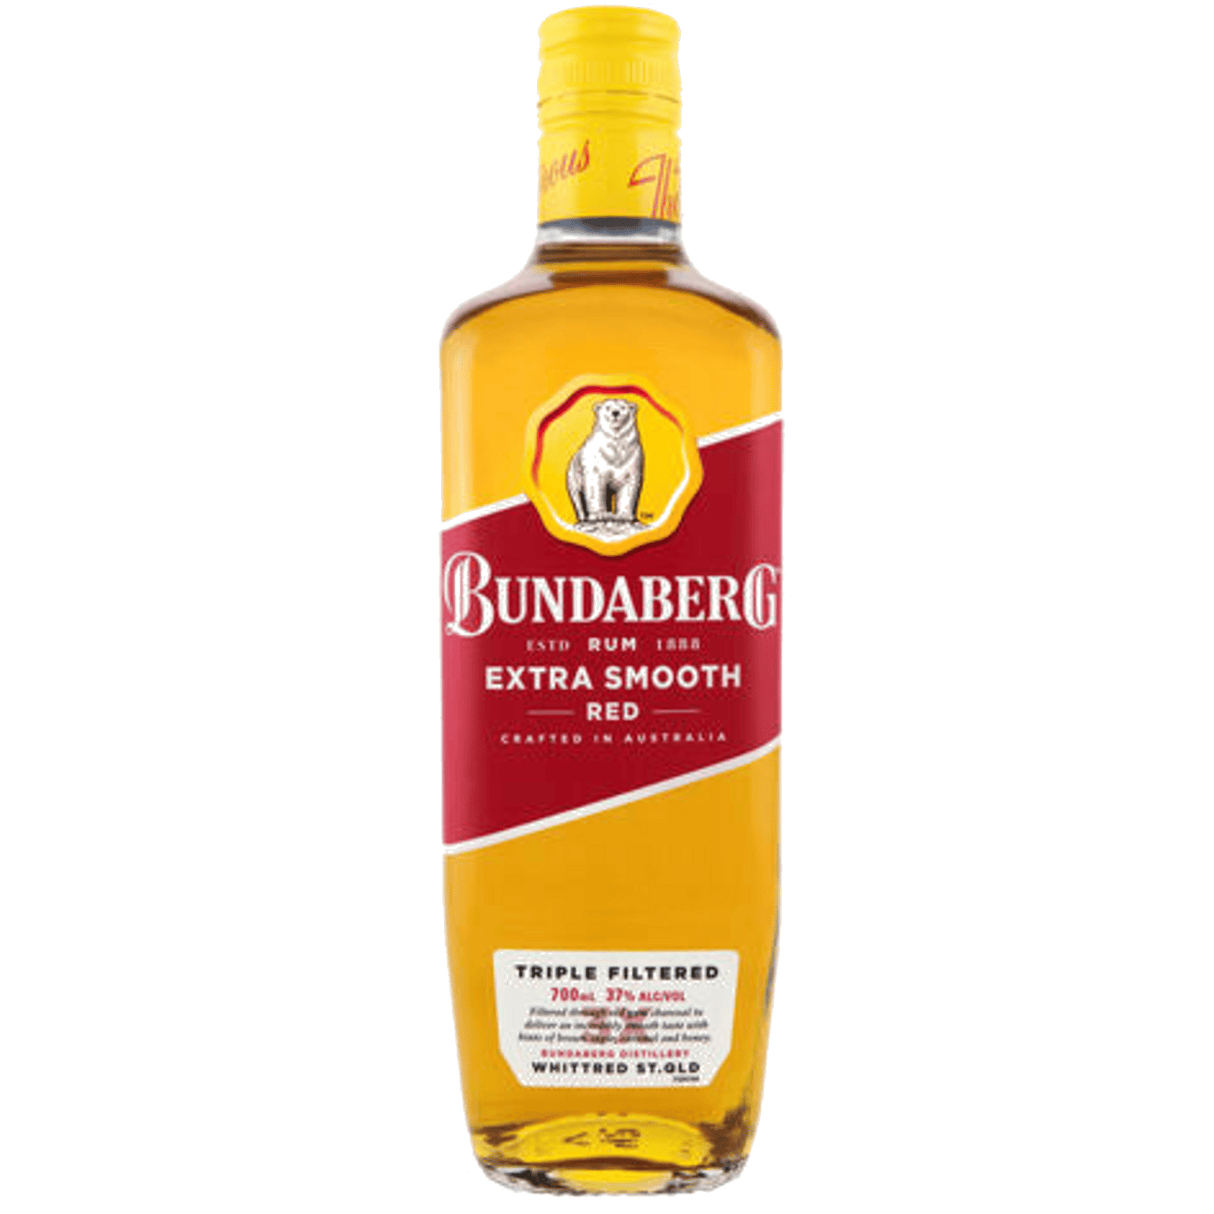 Bundaberg Extra Smooth Red Rum 700ml